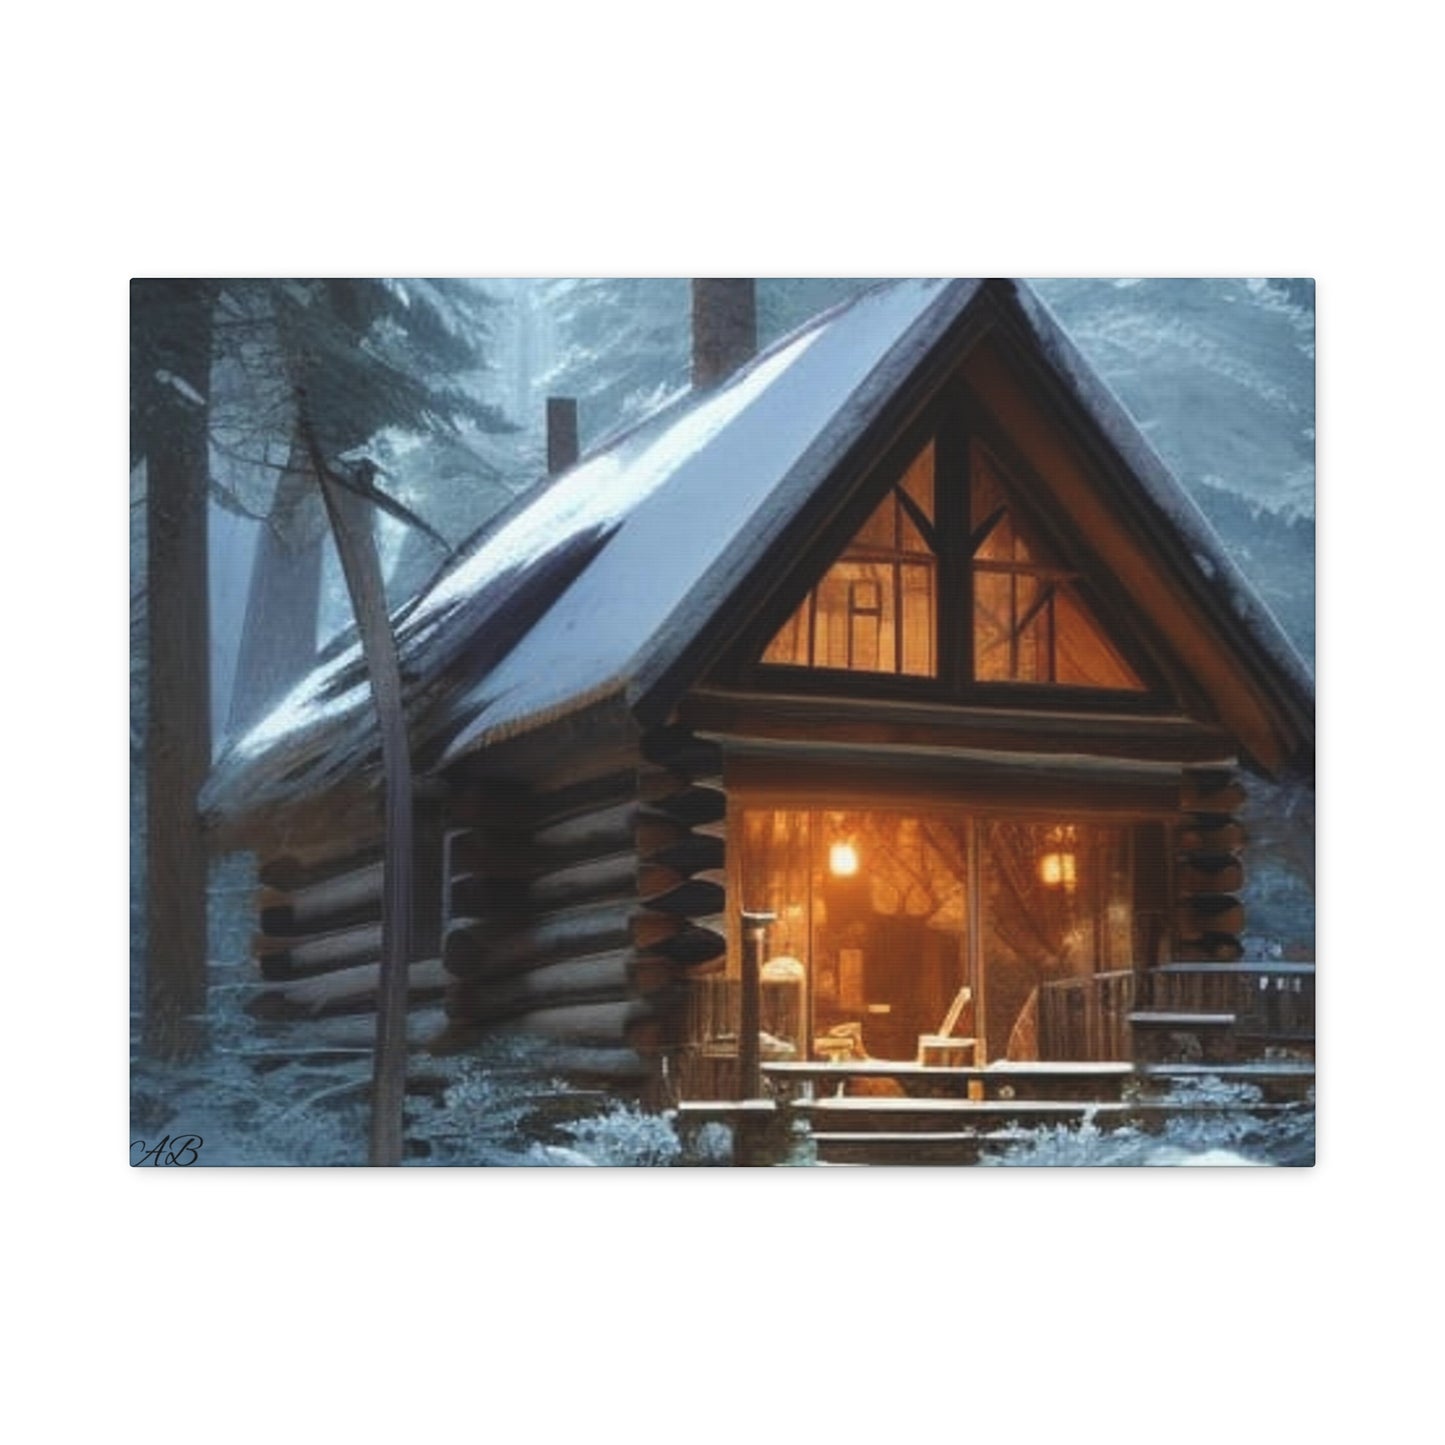 Whispering pines cabin retreat